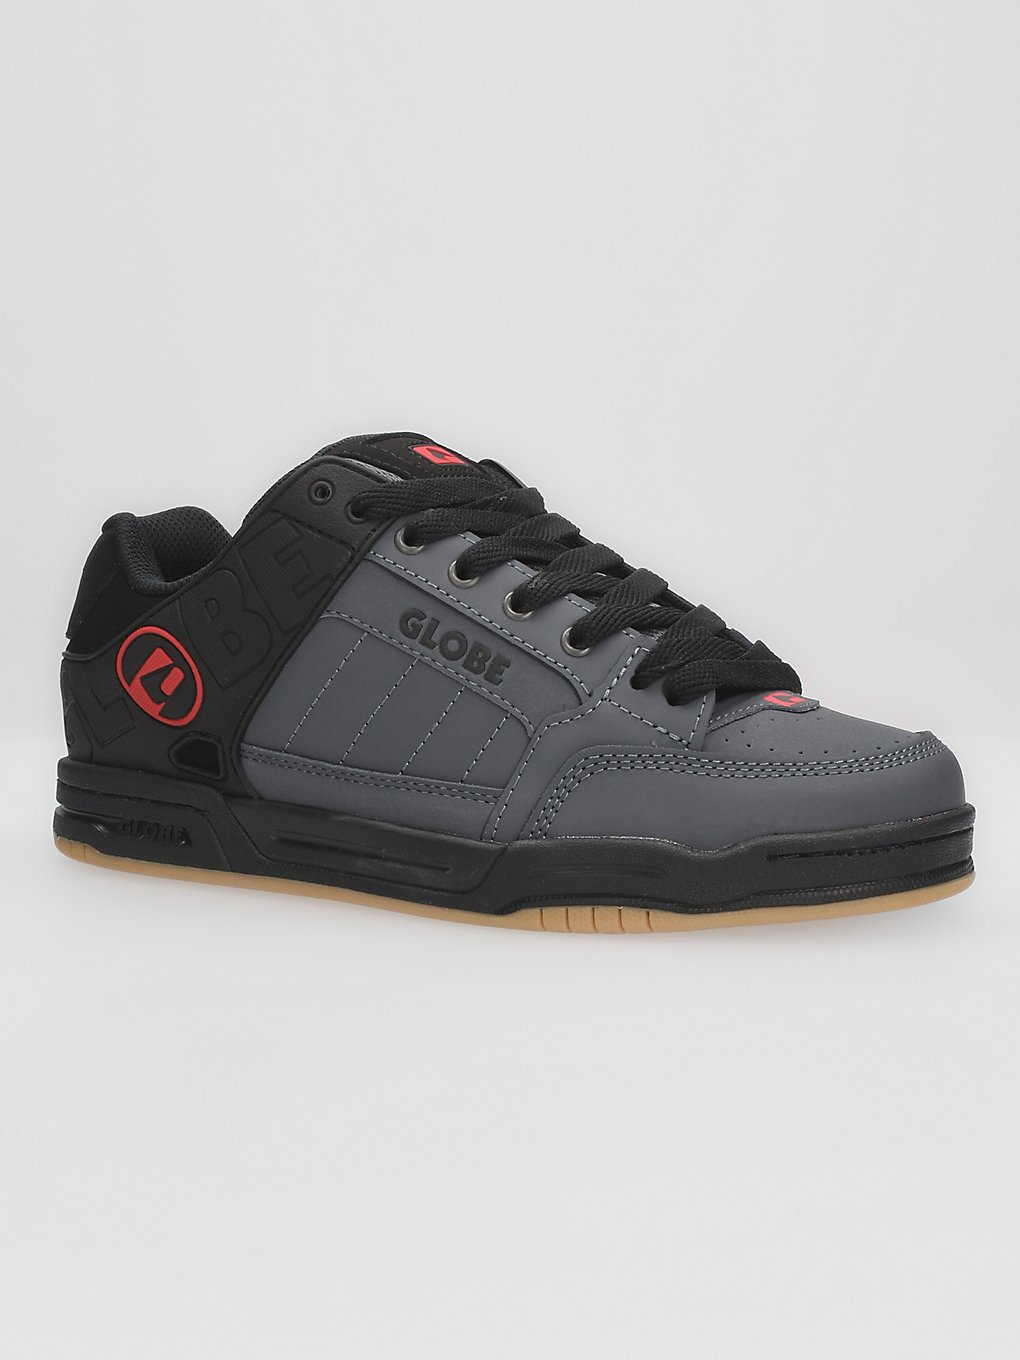 Globe Tilt Skate Shoes black/grey/red